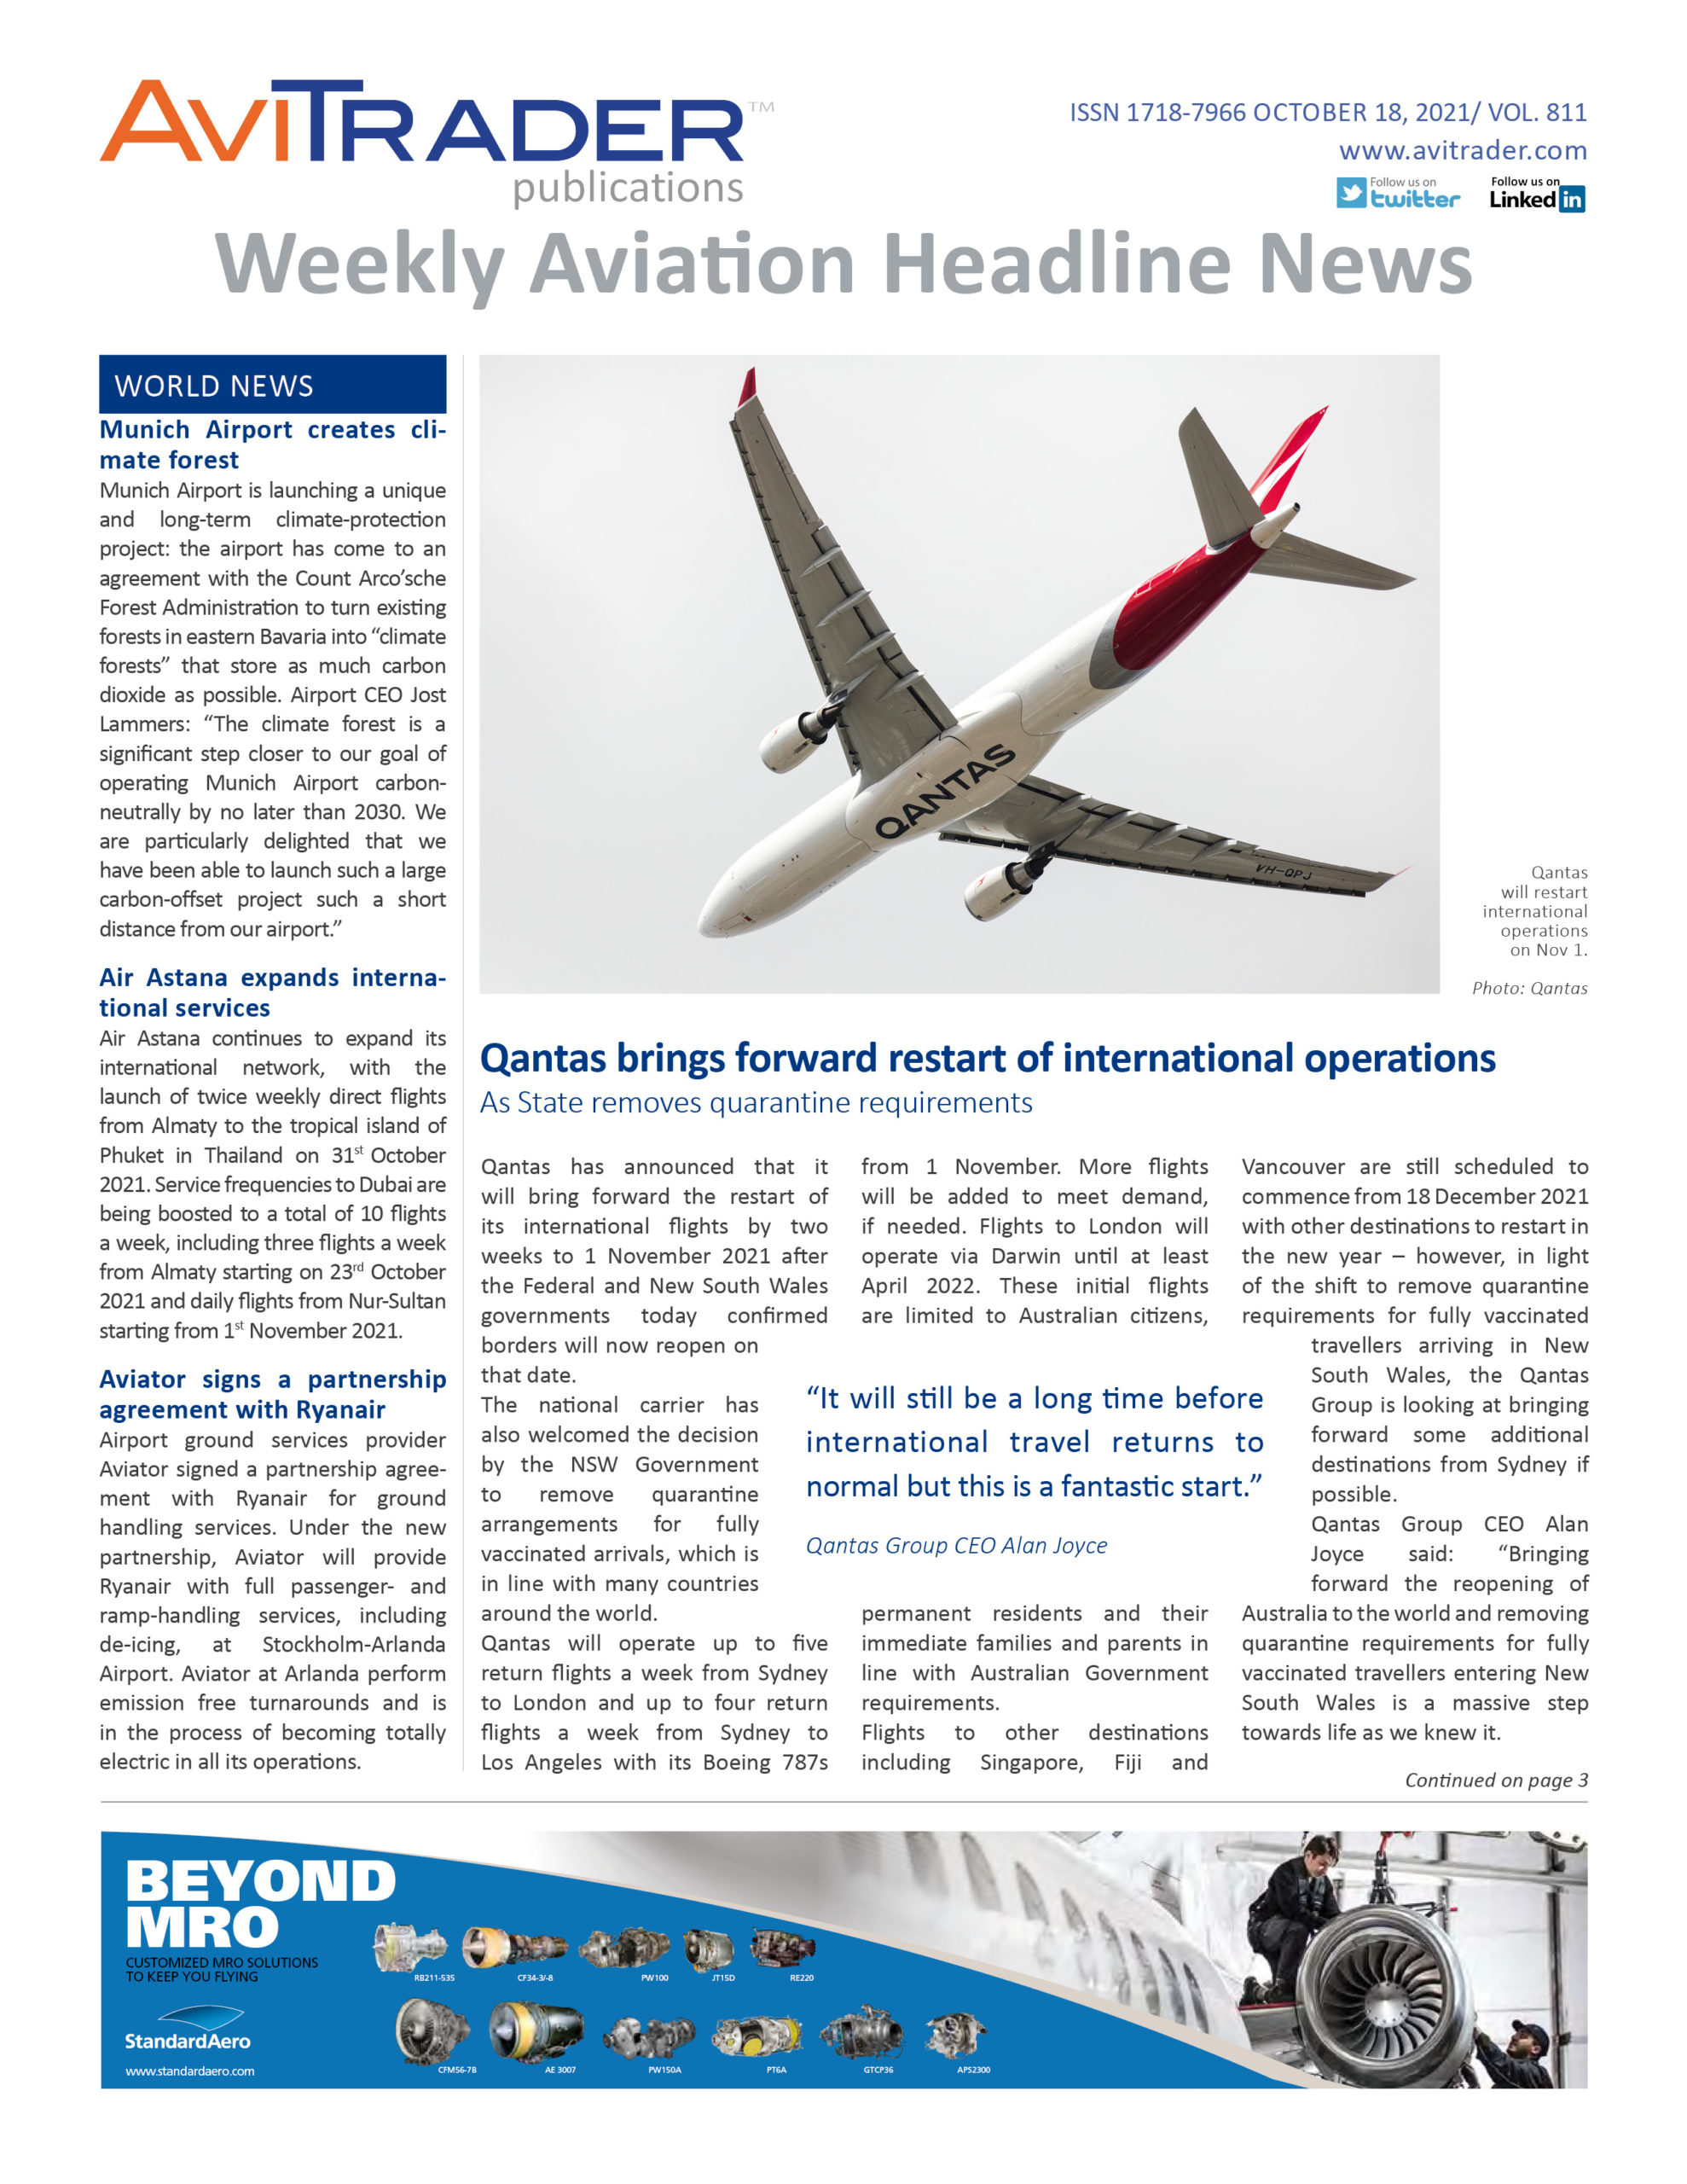 AviTrader_Weekly_Headline_News_Cover_2021-10-18